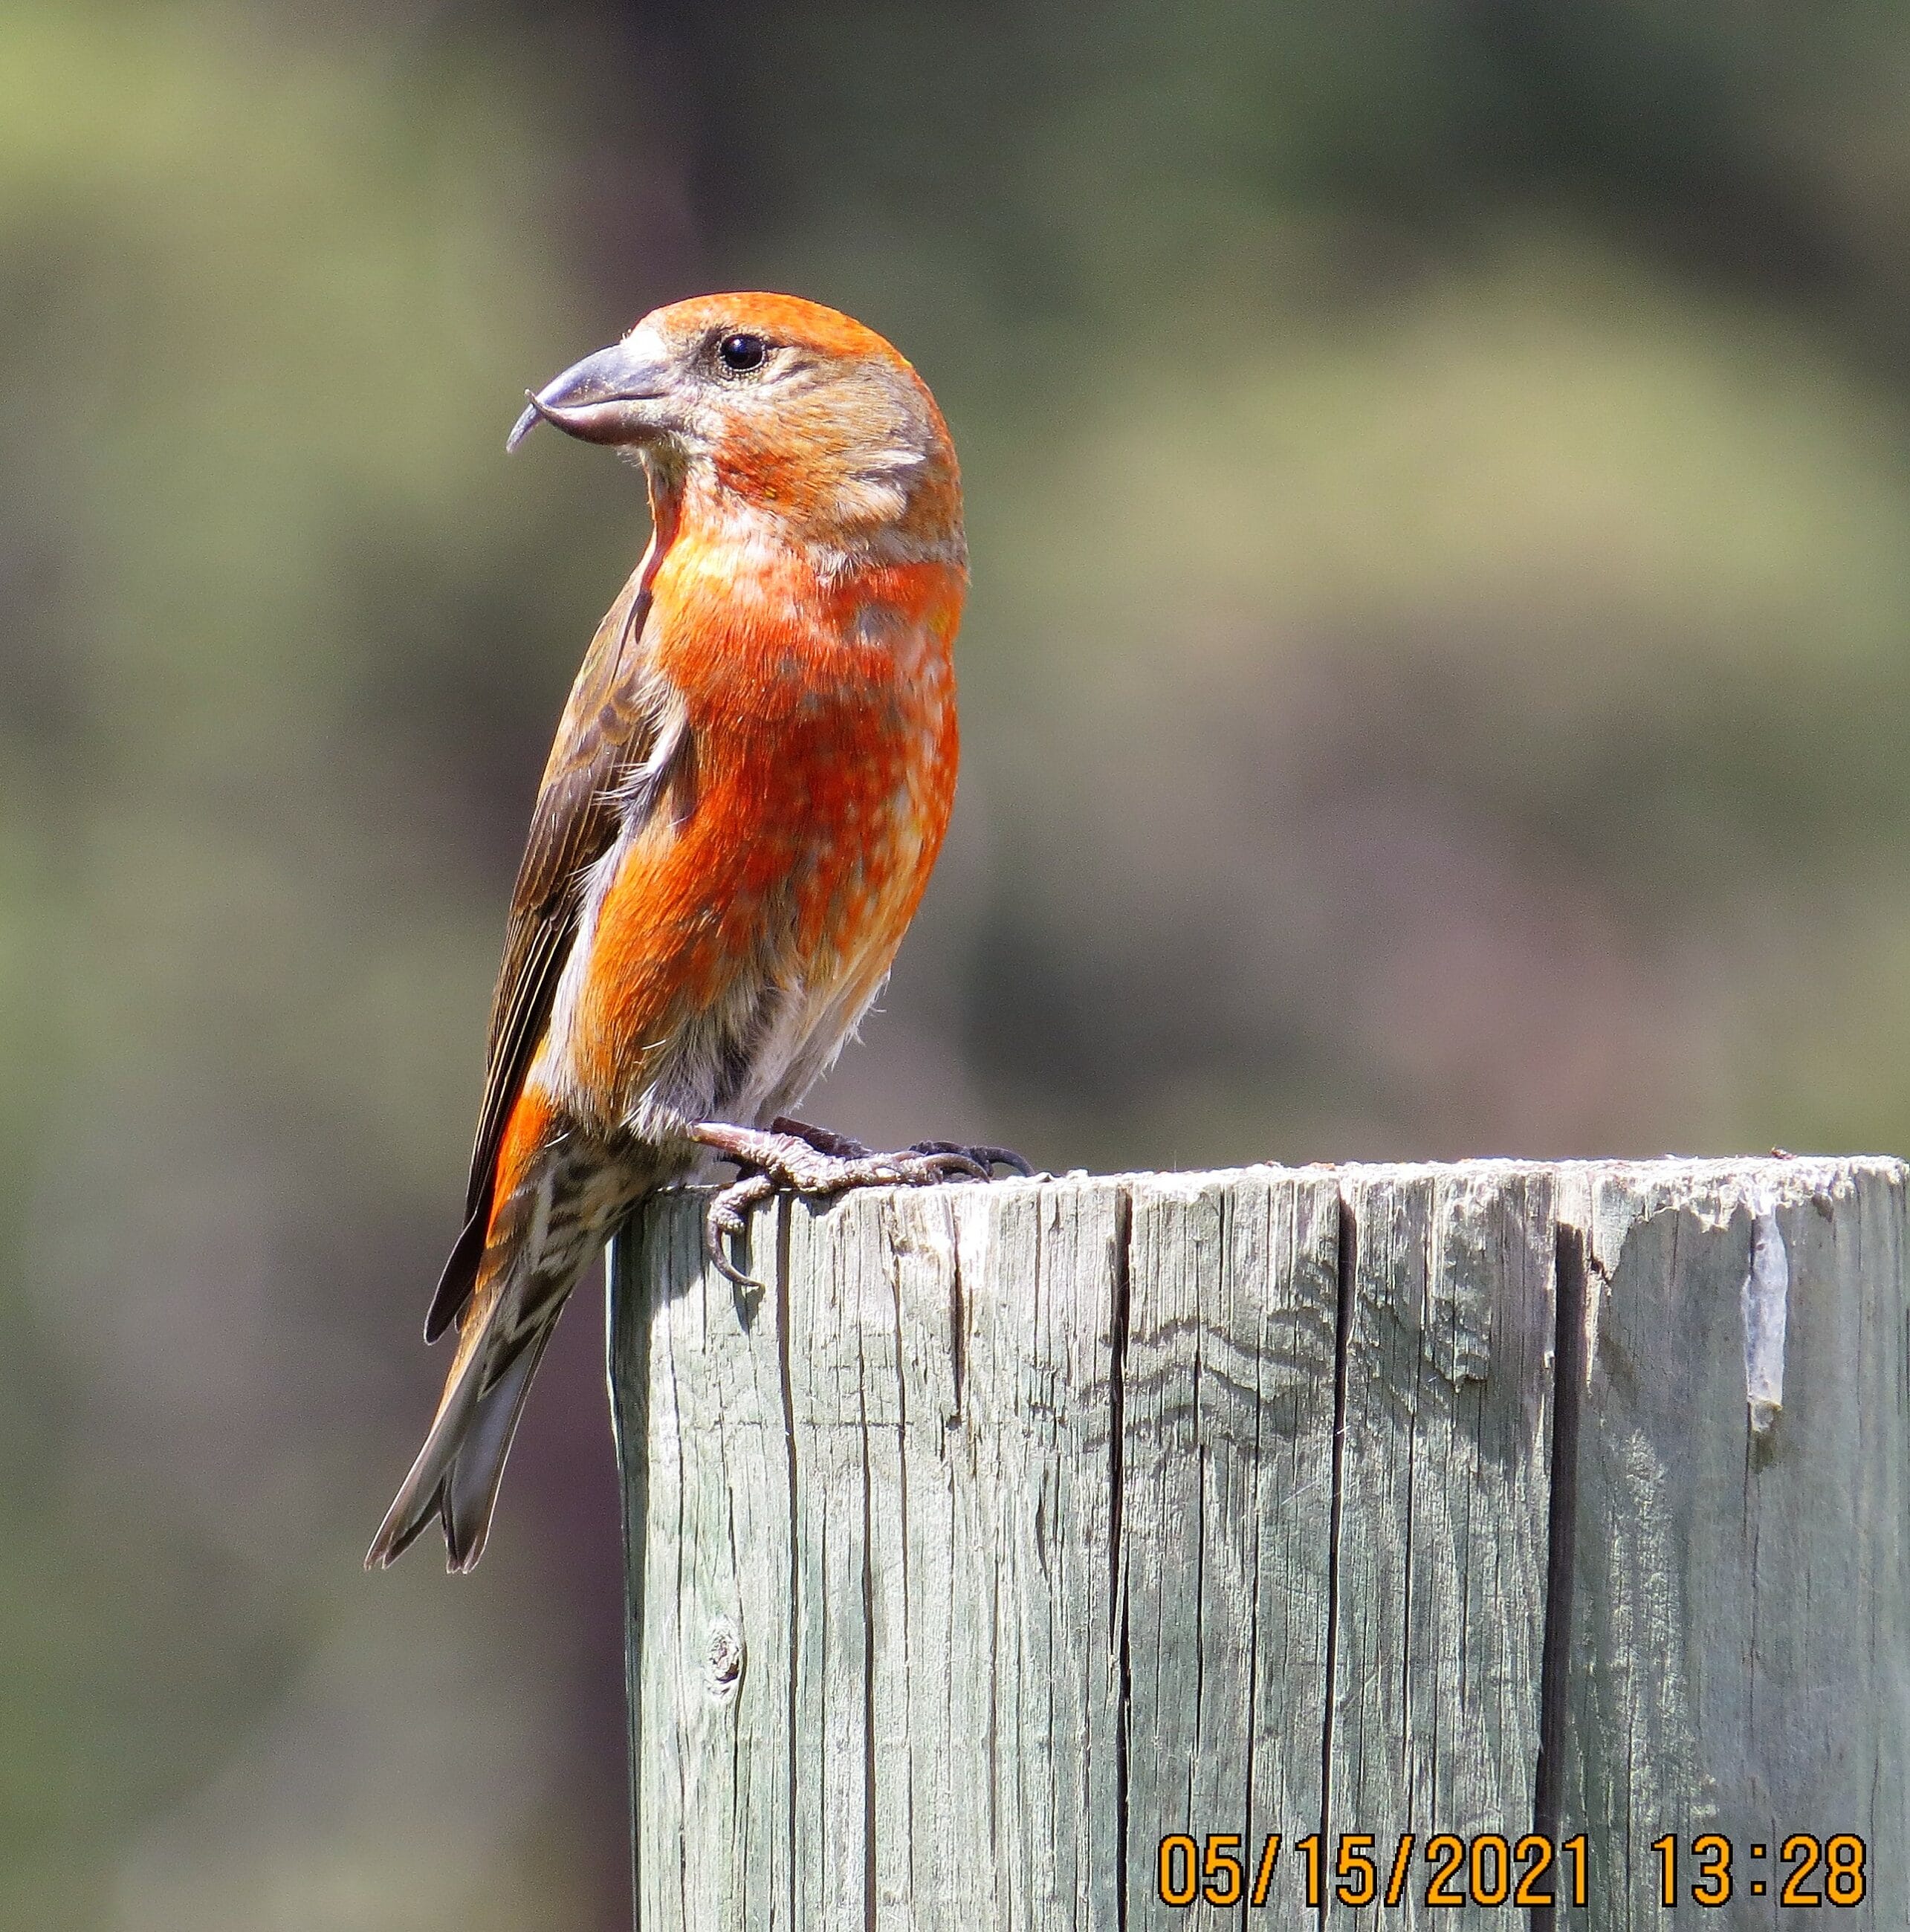 Teanaway Community Forest Late Season Birding